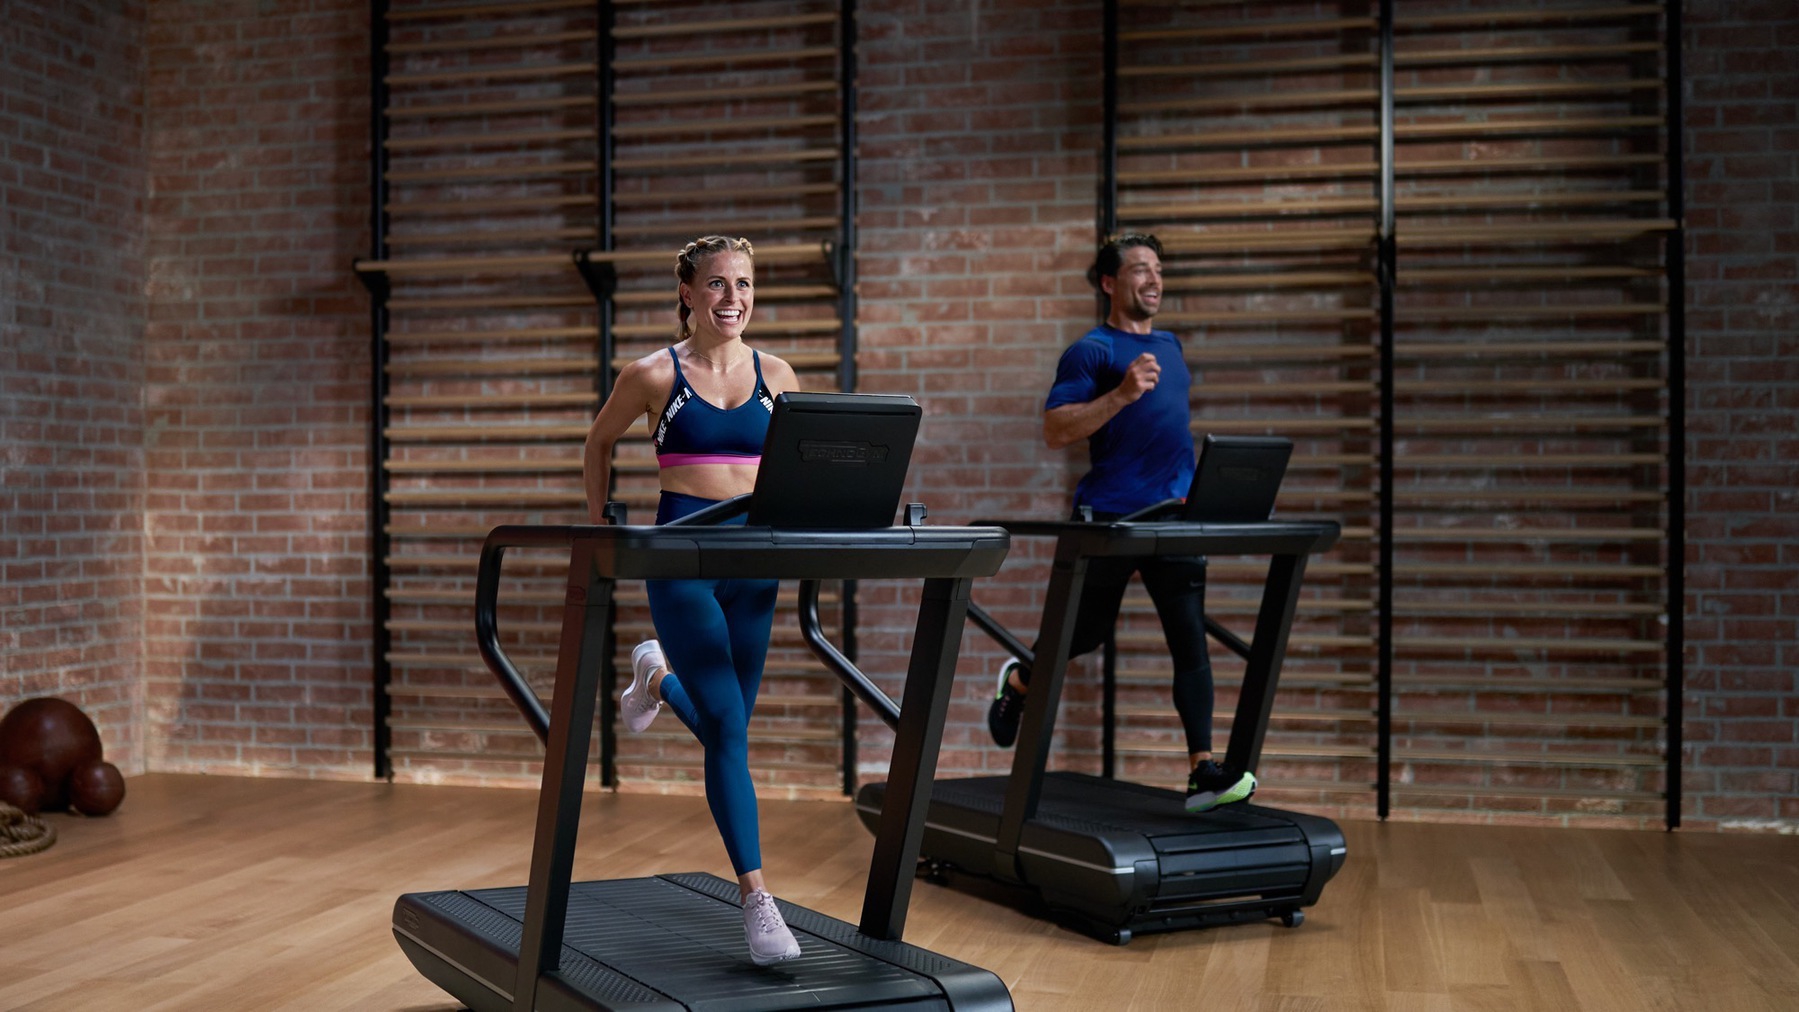 Apple fitnessplus treadmill workout 12142020